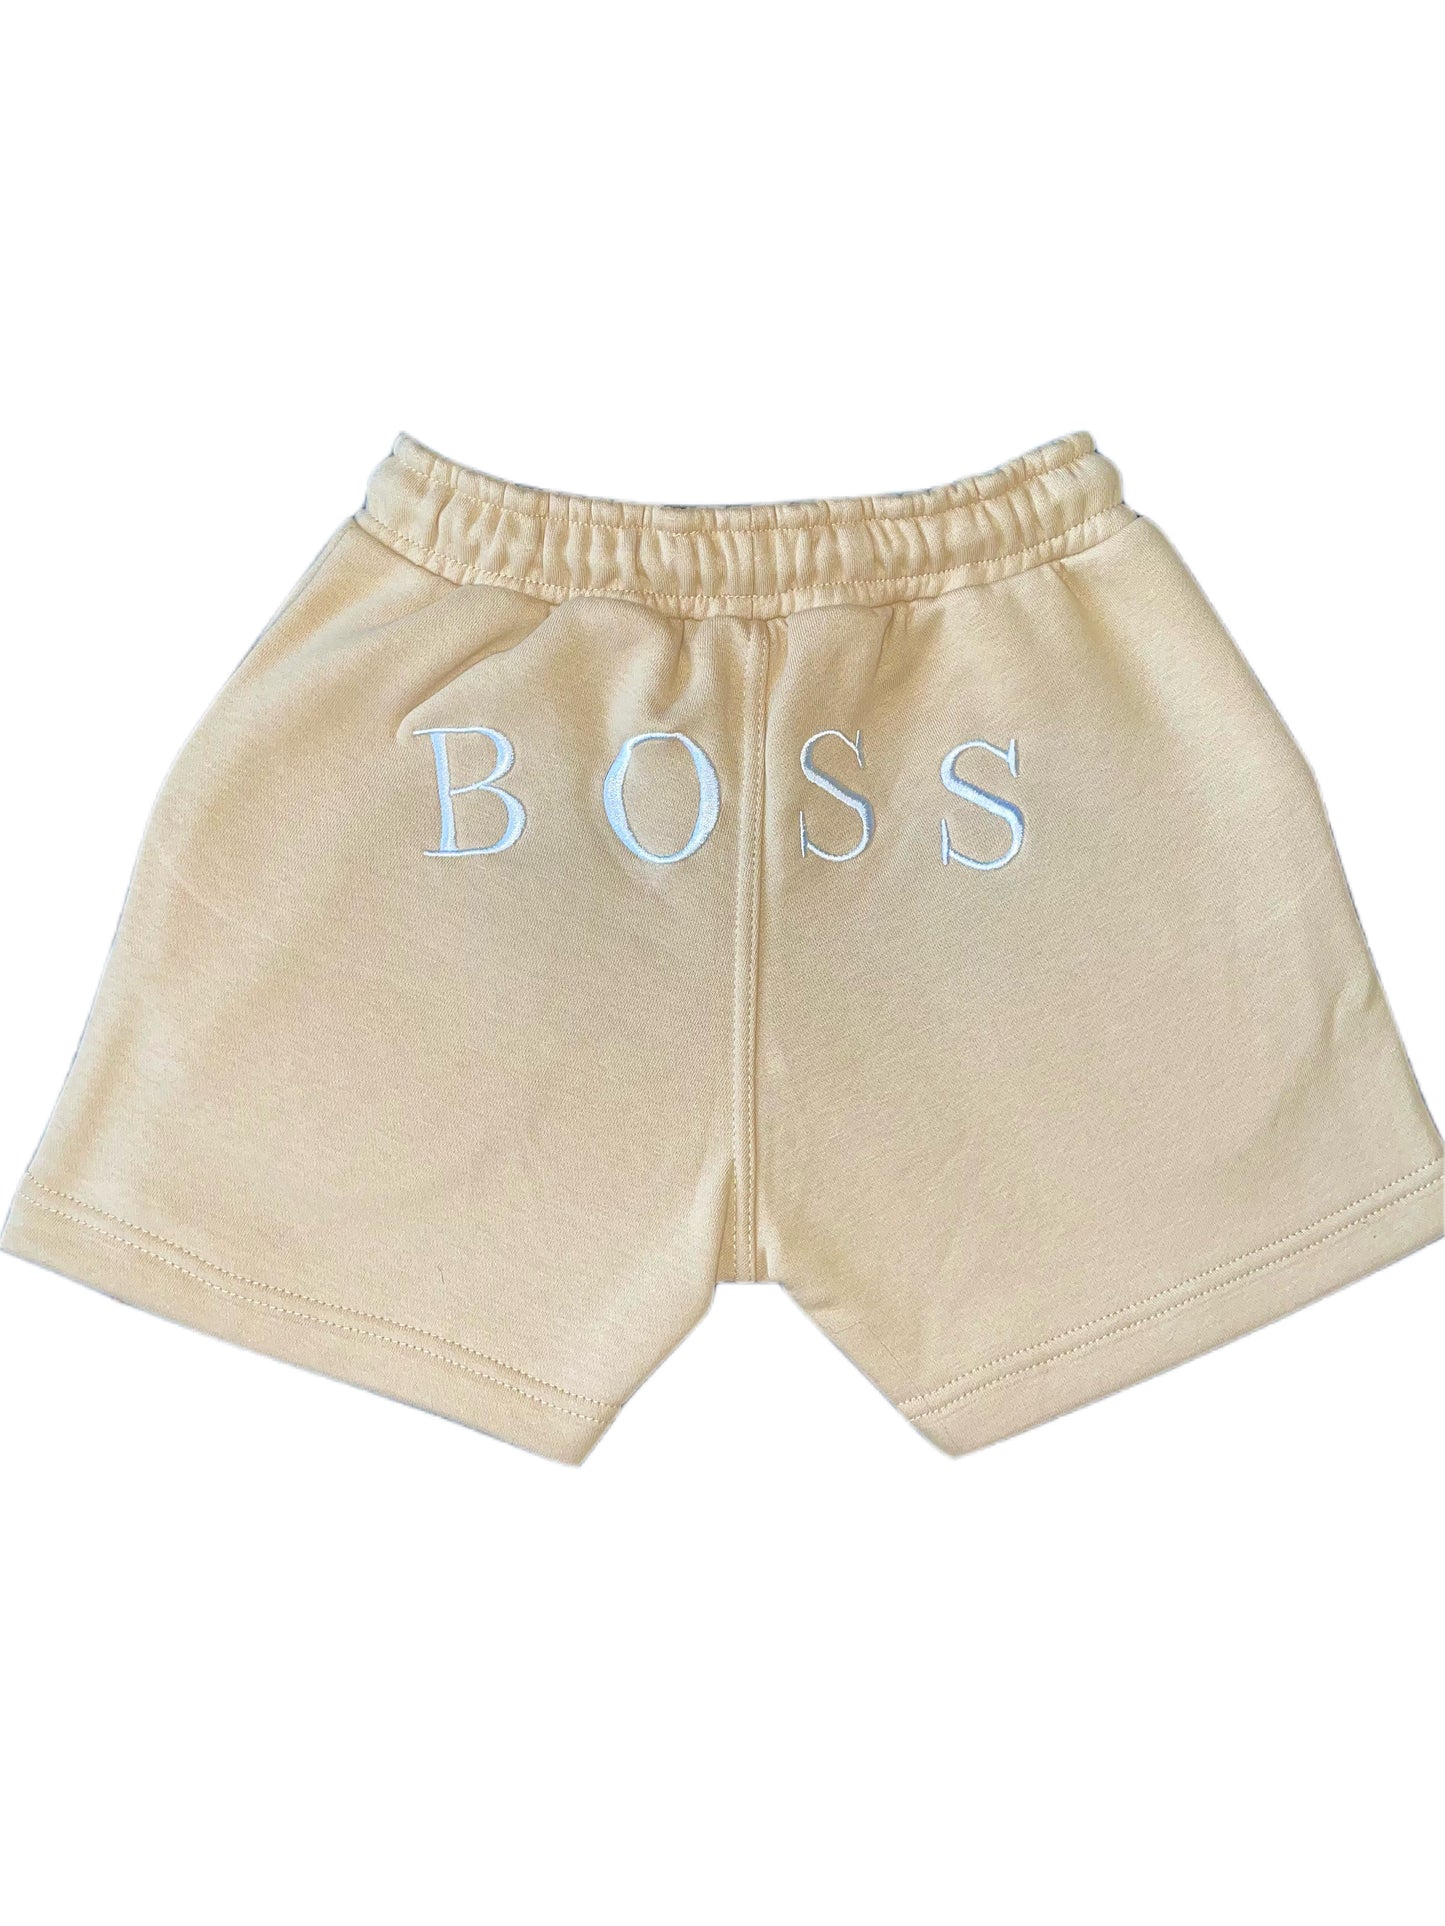 uBoss Shorts